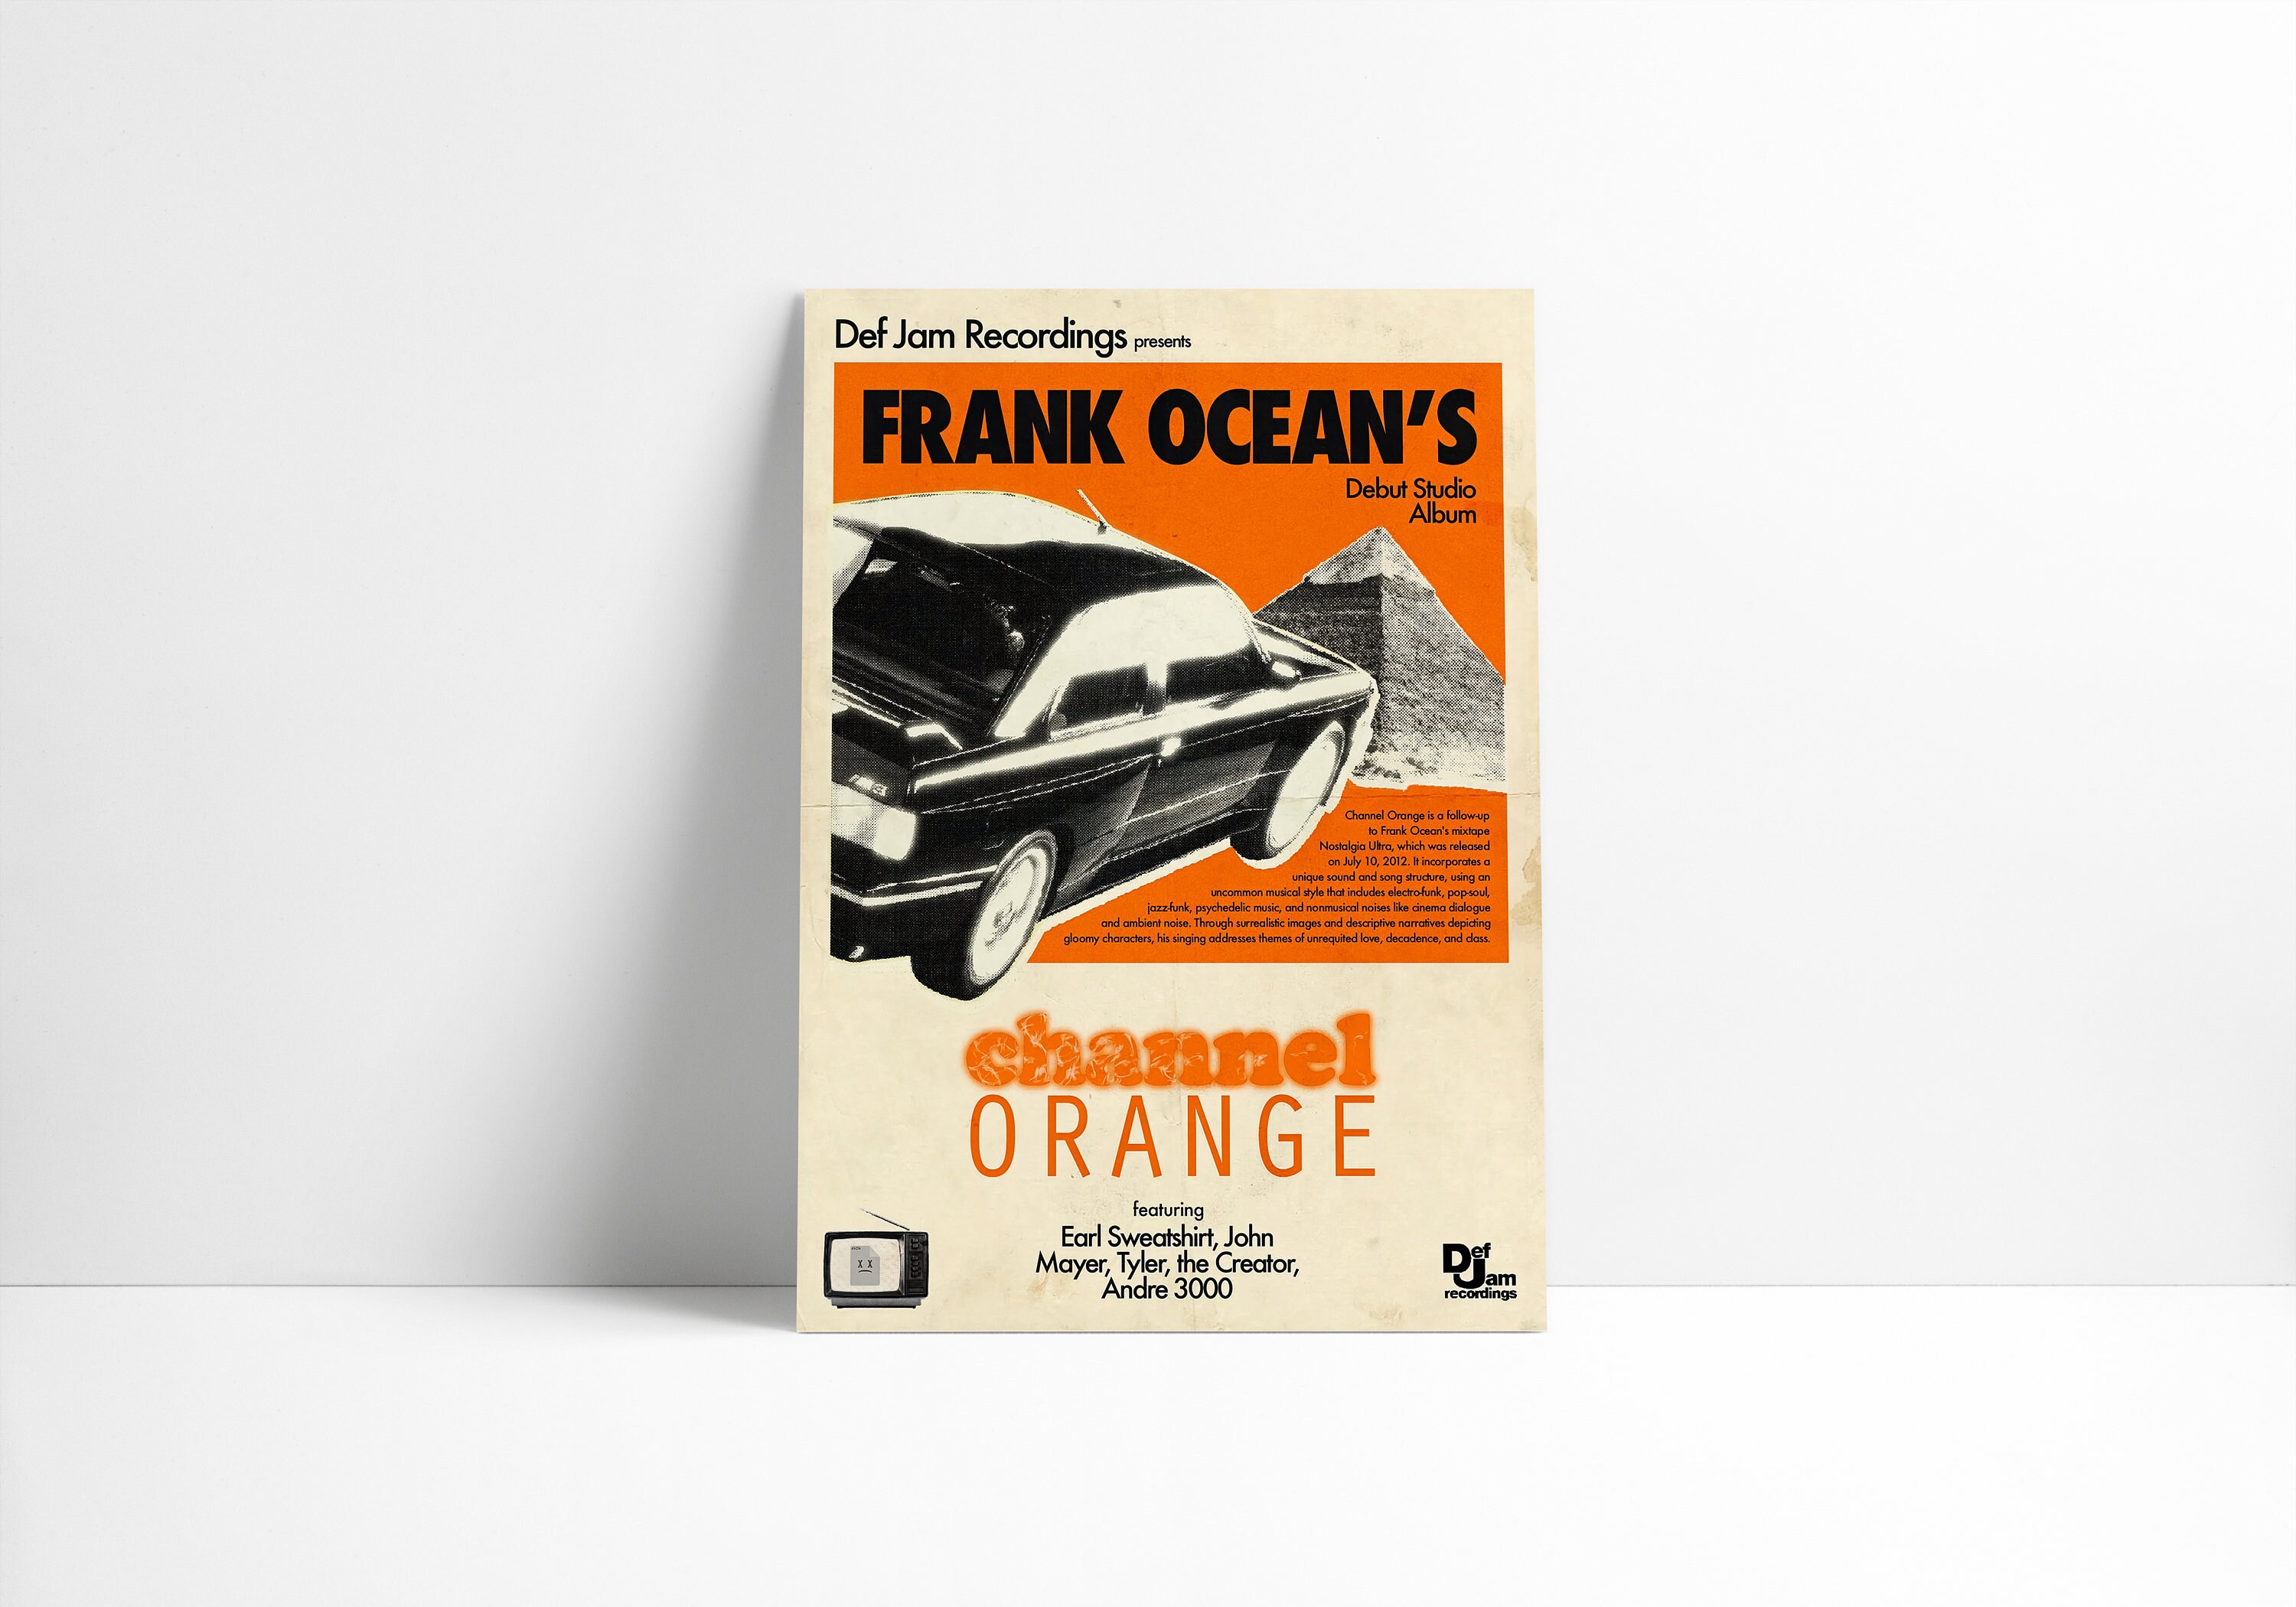 Frank Ocean Channel Orange Poster